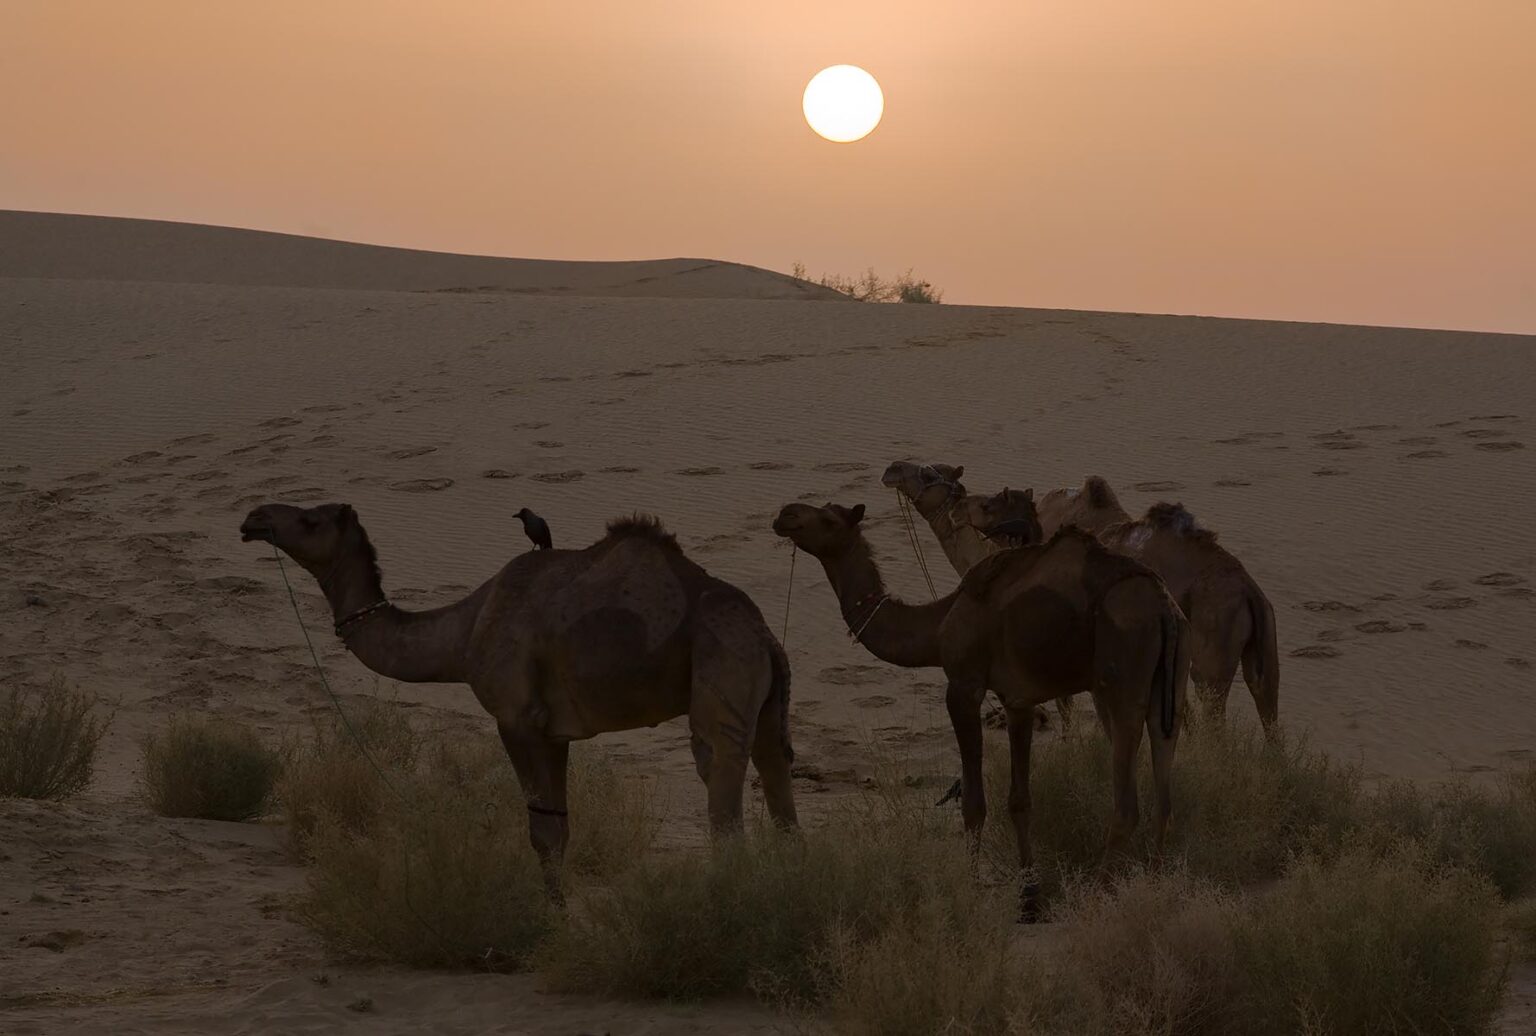 CAMELS (Camelus bactrianus) seem to enjoy the SUNSET in the THAR DESERT near JAISALMER - RAJASTHAN, INDIA